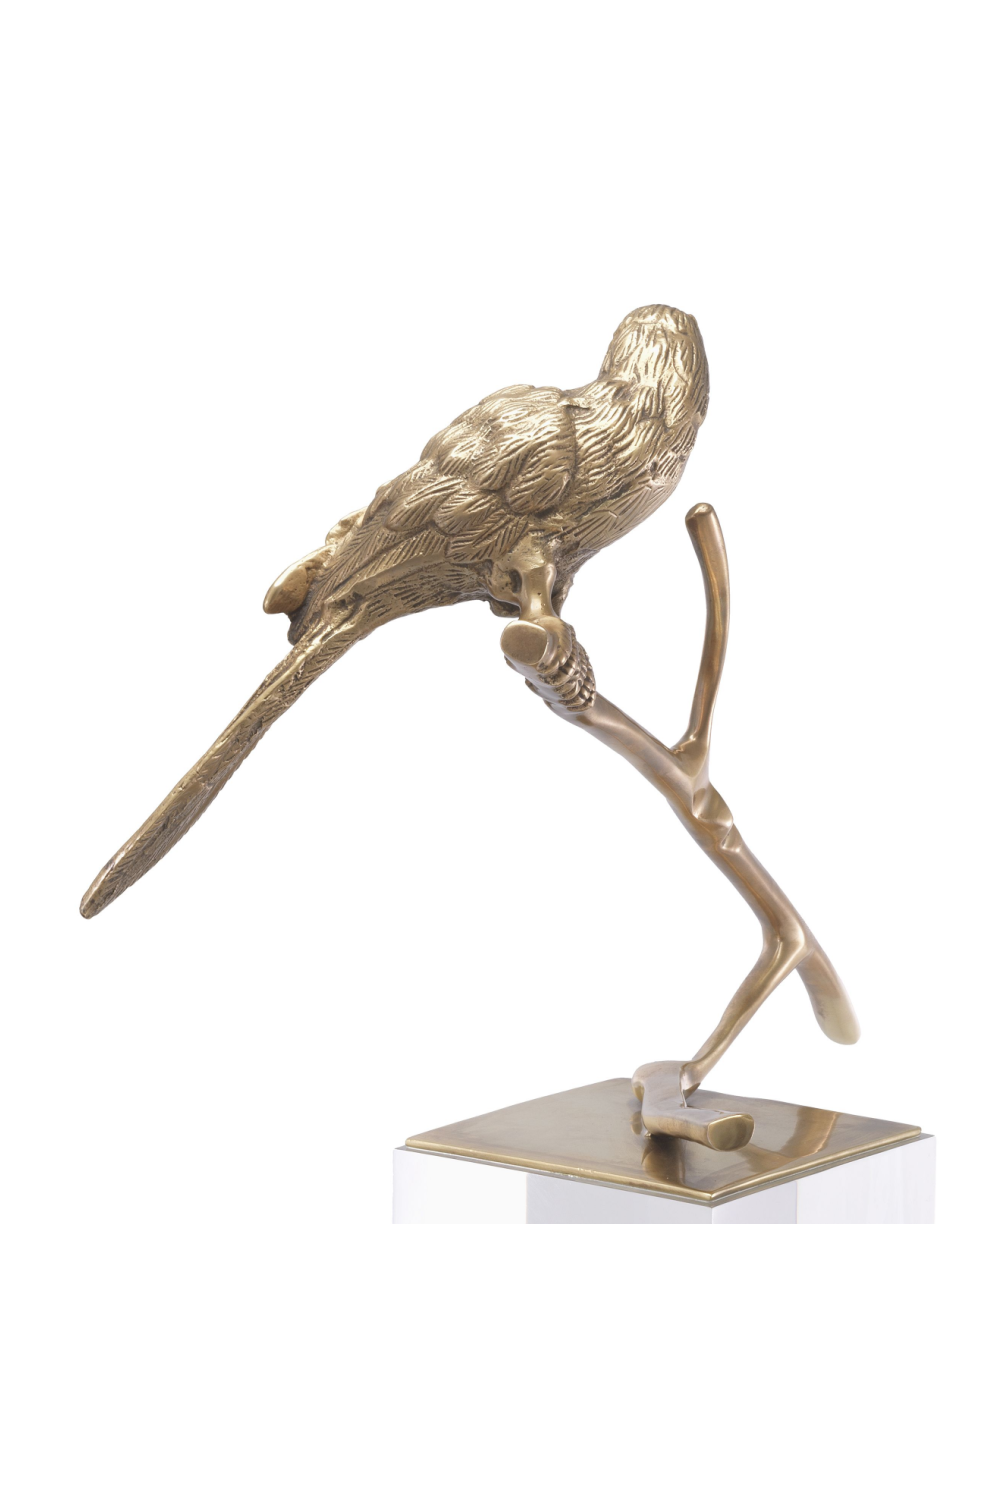 Antique Brass Bird Figurine Set (2) - Eichholtz Morgana | OROA